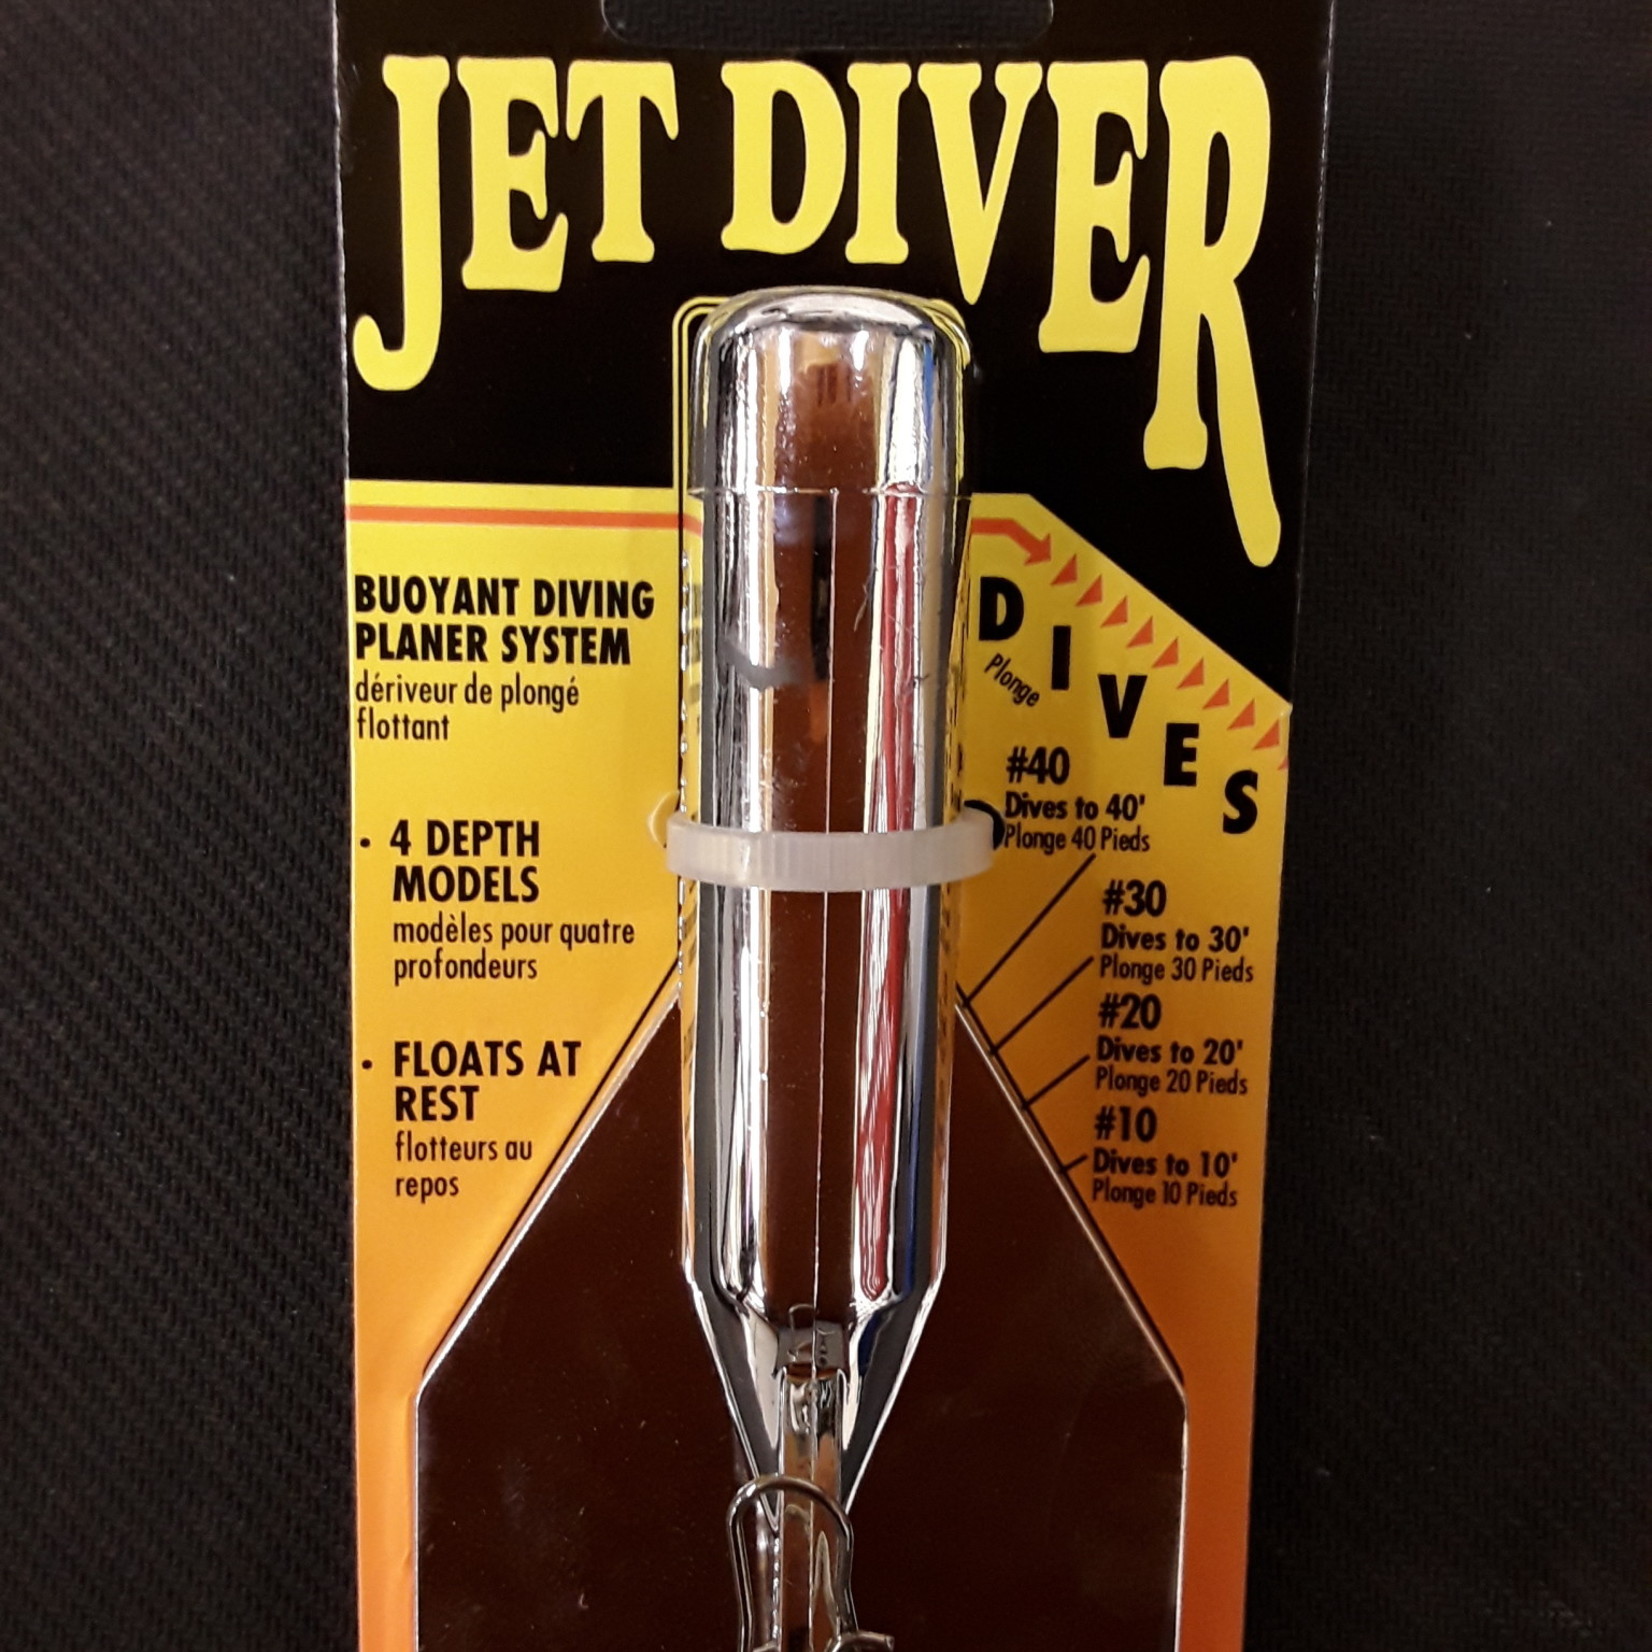 Luhr-Jensen Jet Diver 10'